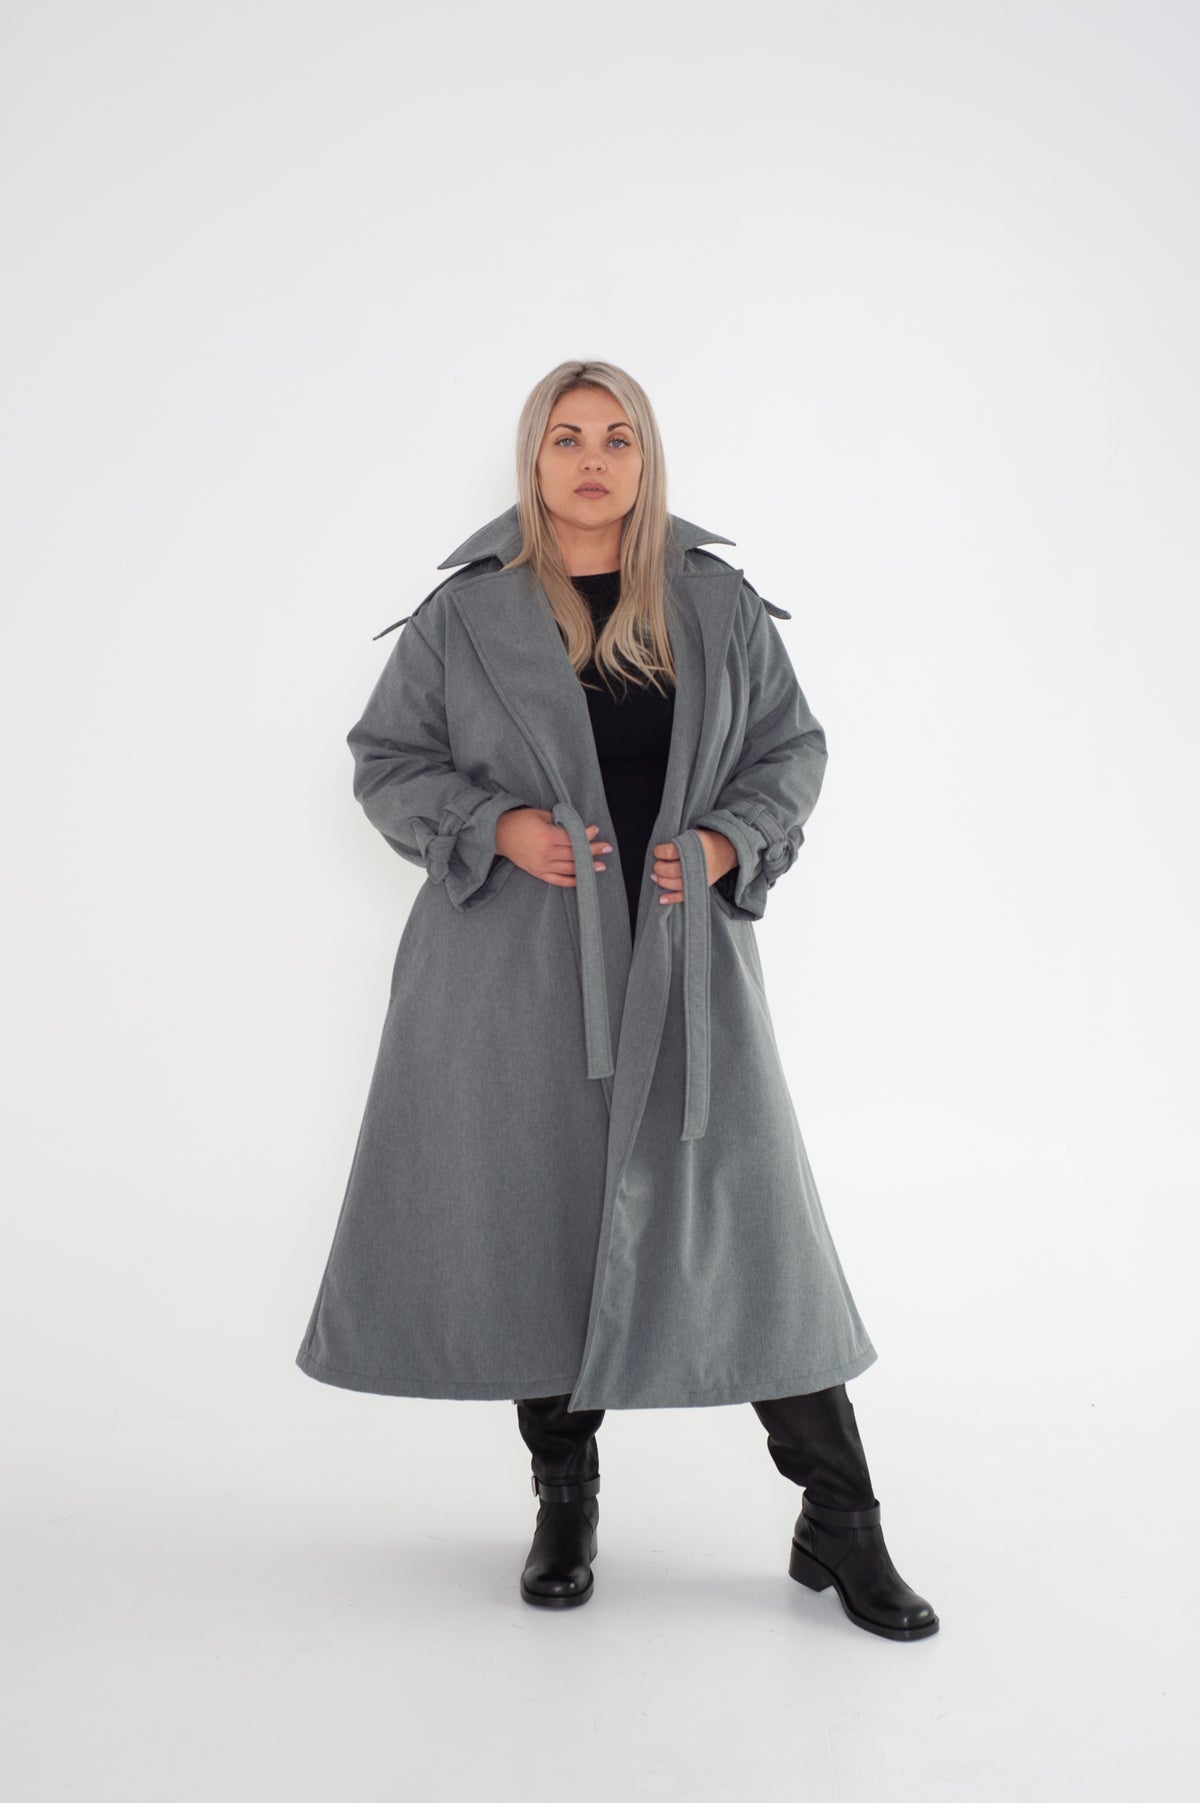 Classic grey trench coat